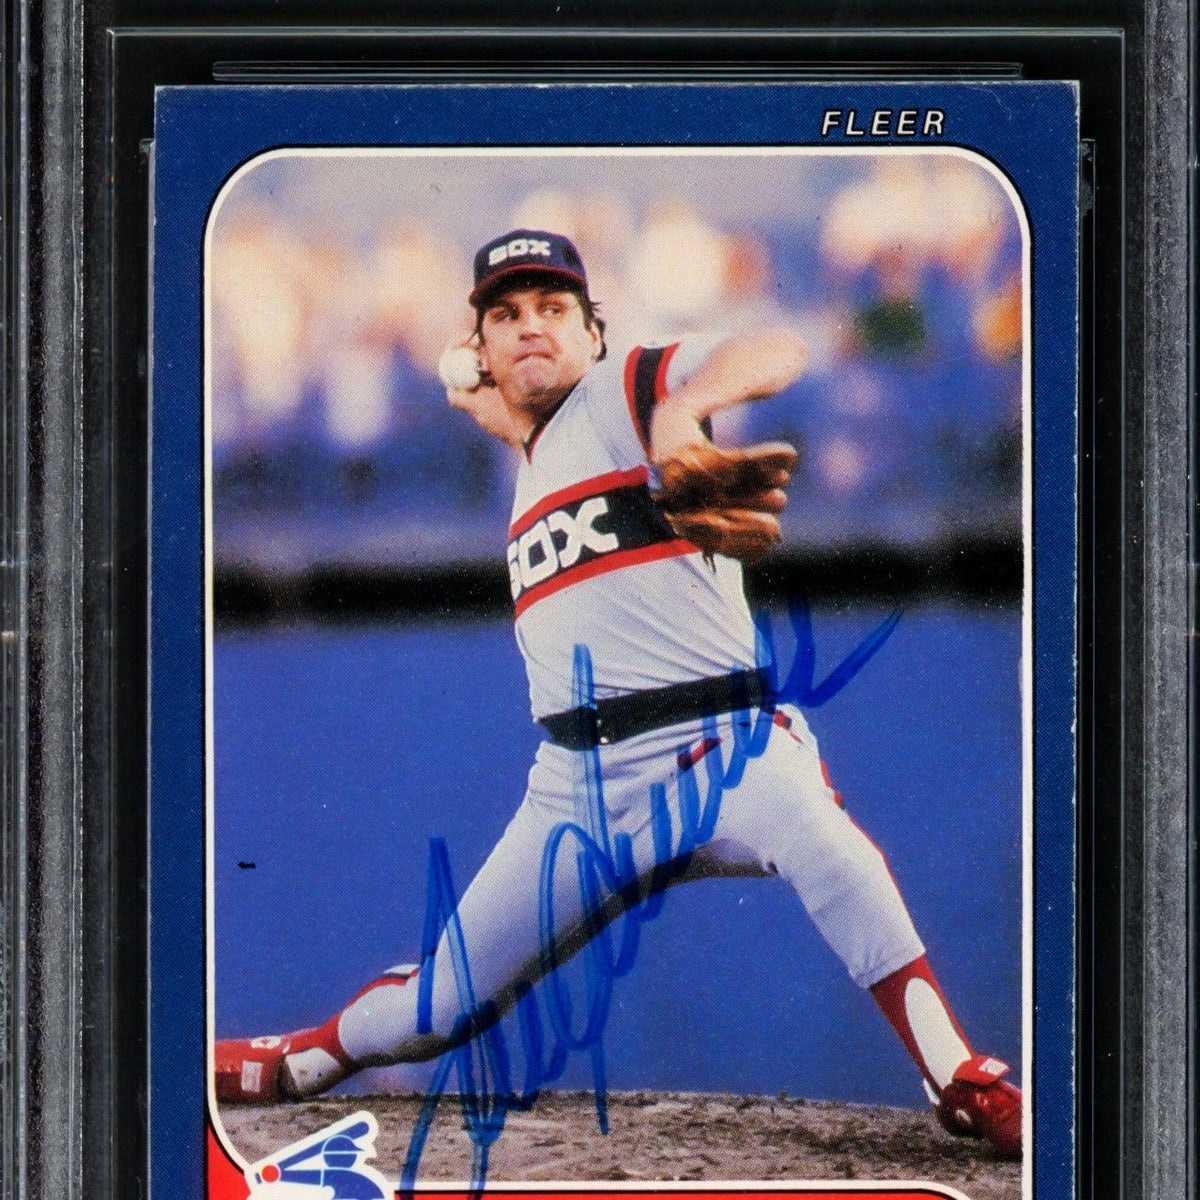 Tom Seaver Autographed 1986 Fleer Card #216 Chicago White Sox HOF 06  Beckett BAS #14612397 - Mill Creek Sports